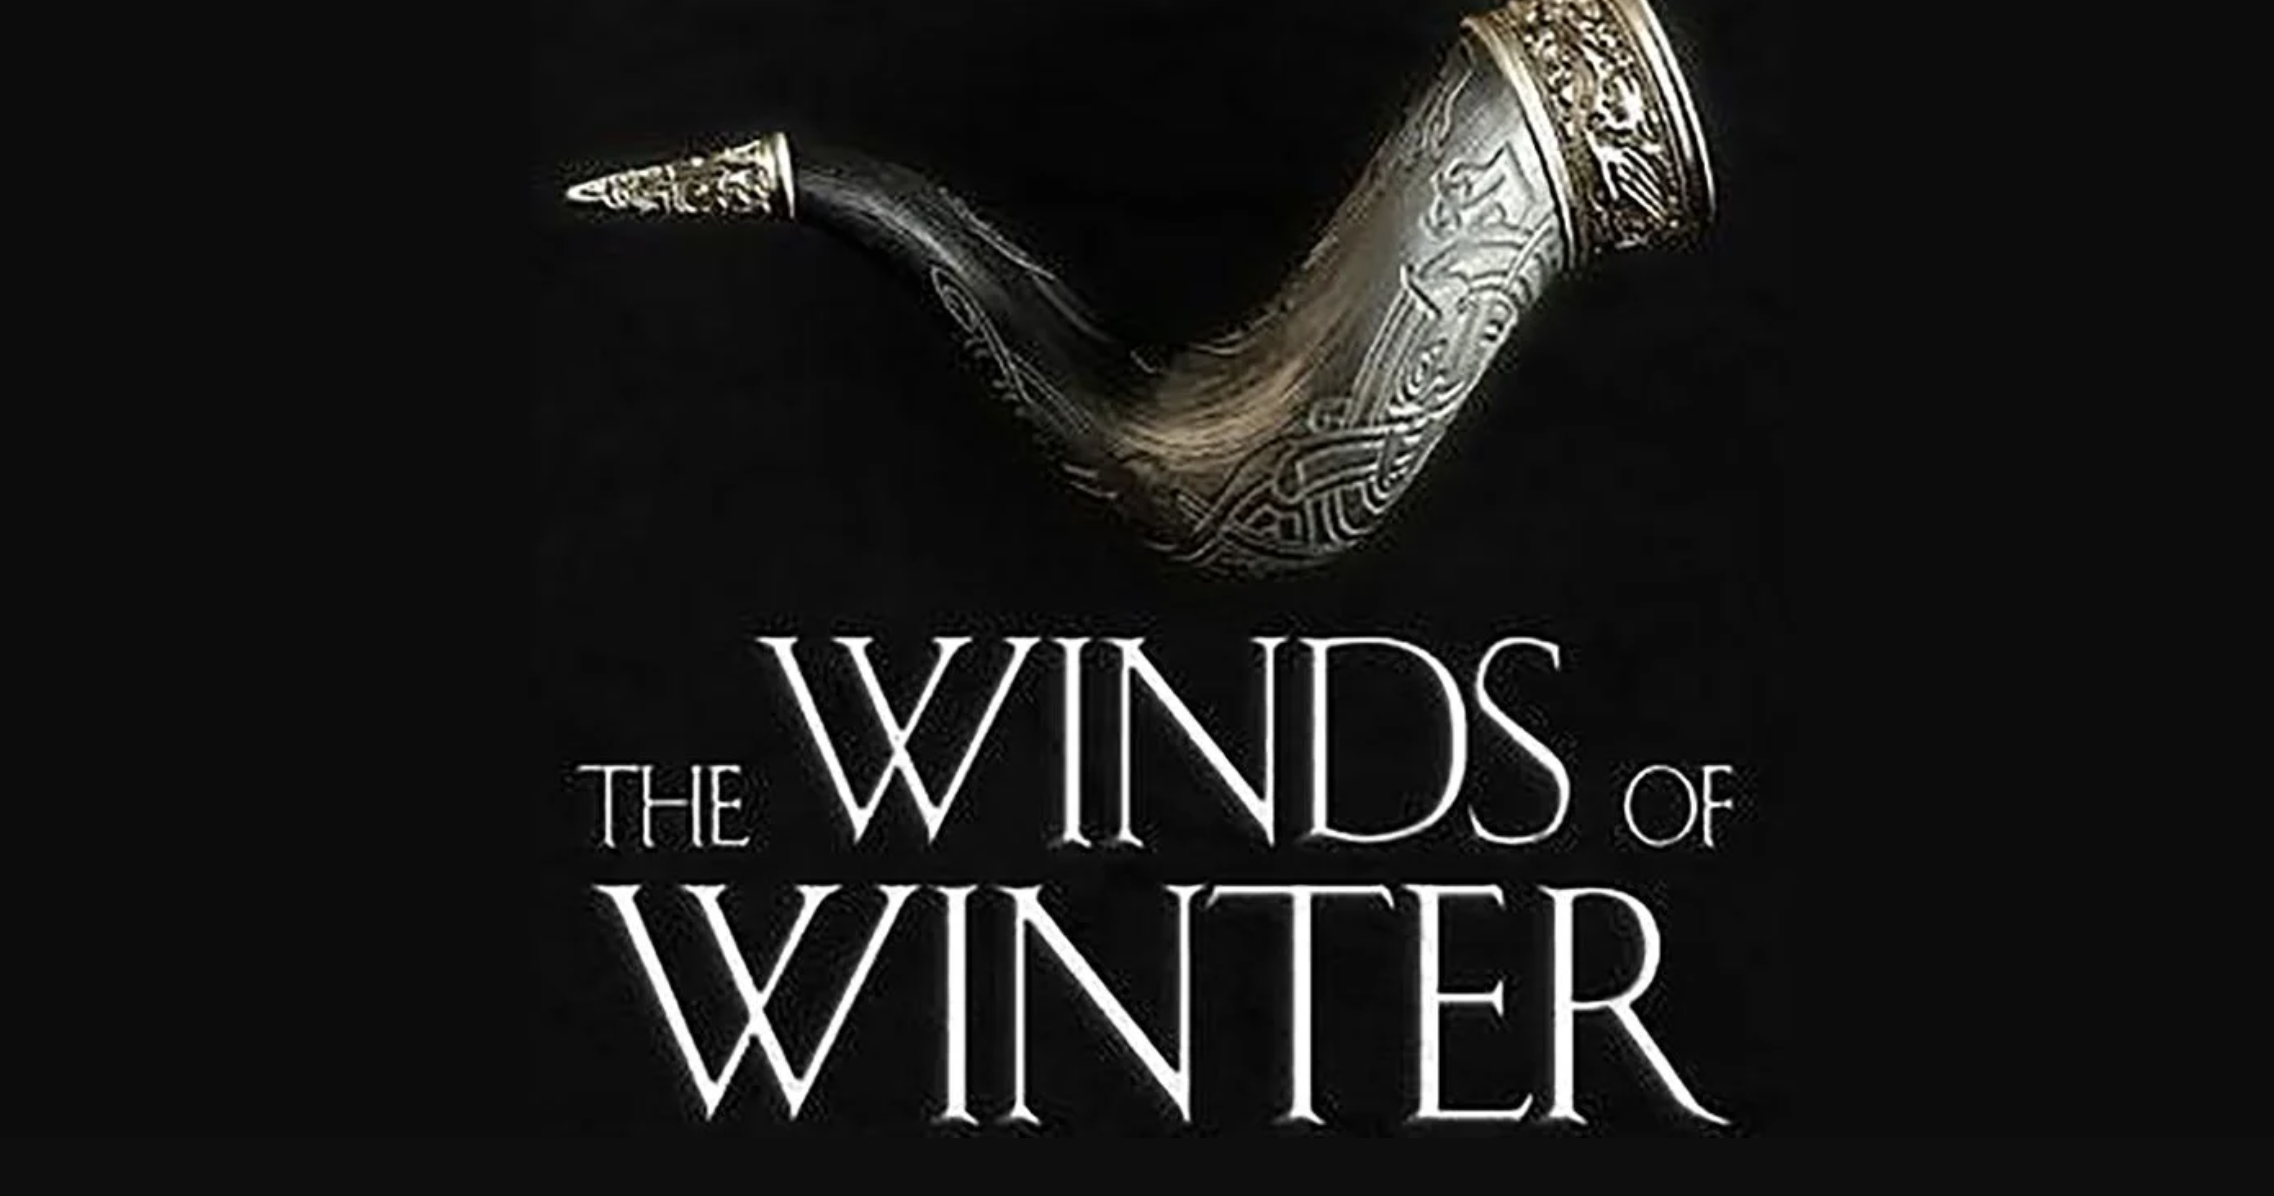 image asset - بخش هایی از فصول پیش نویس شده کتاب The Winds of Winter